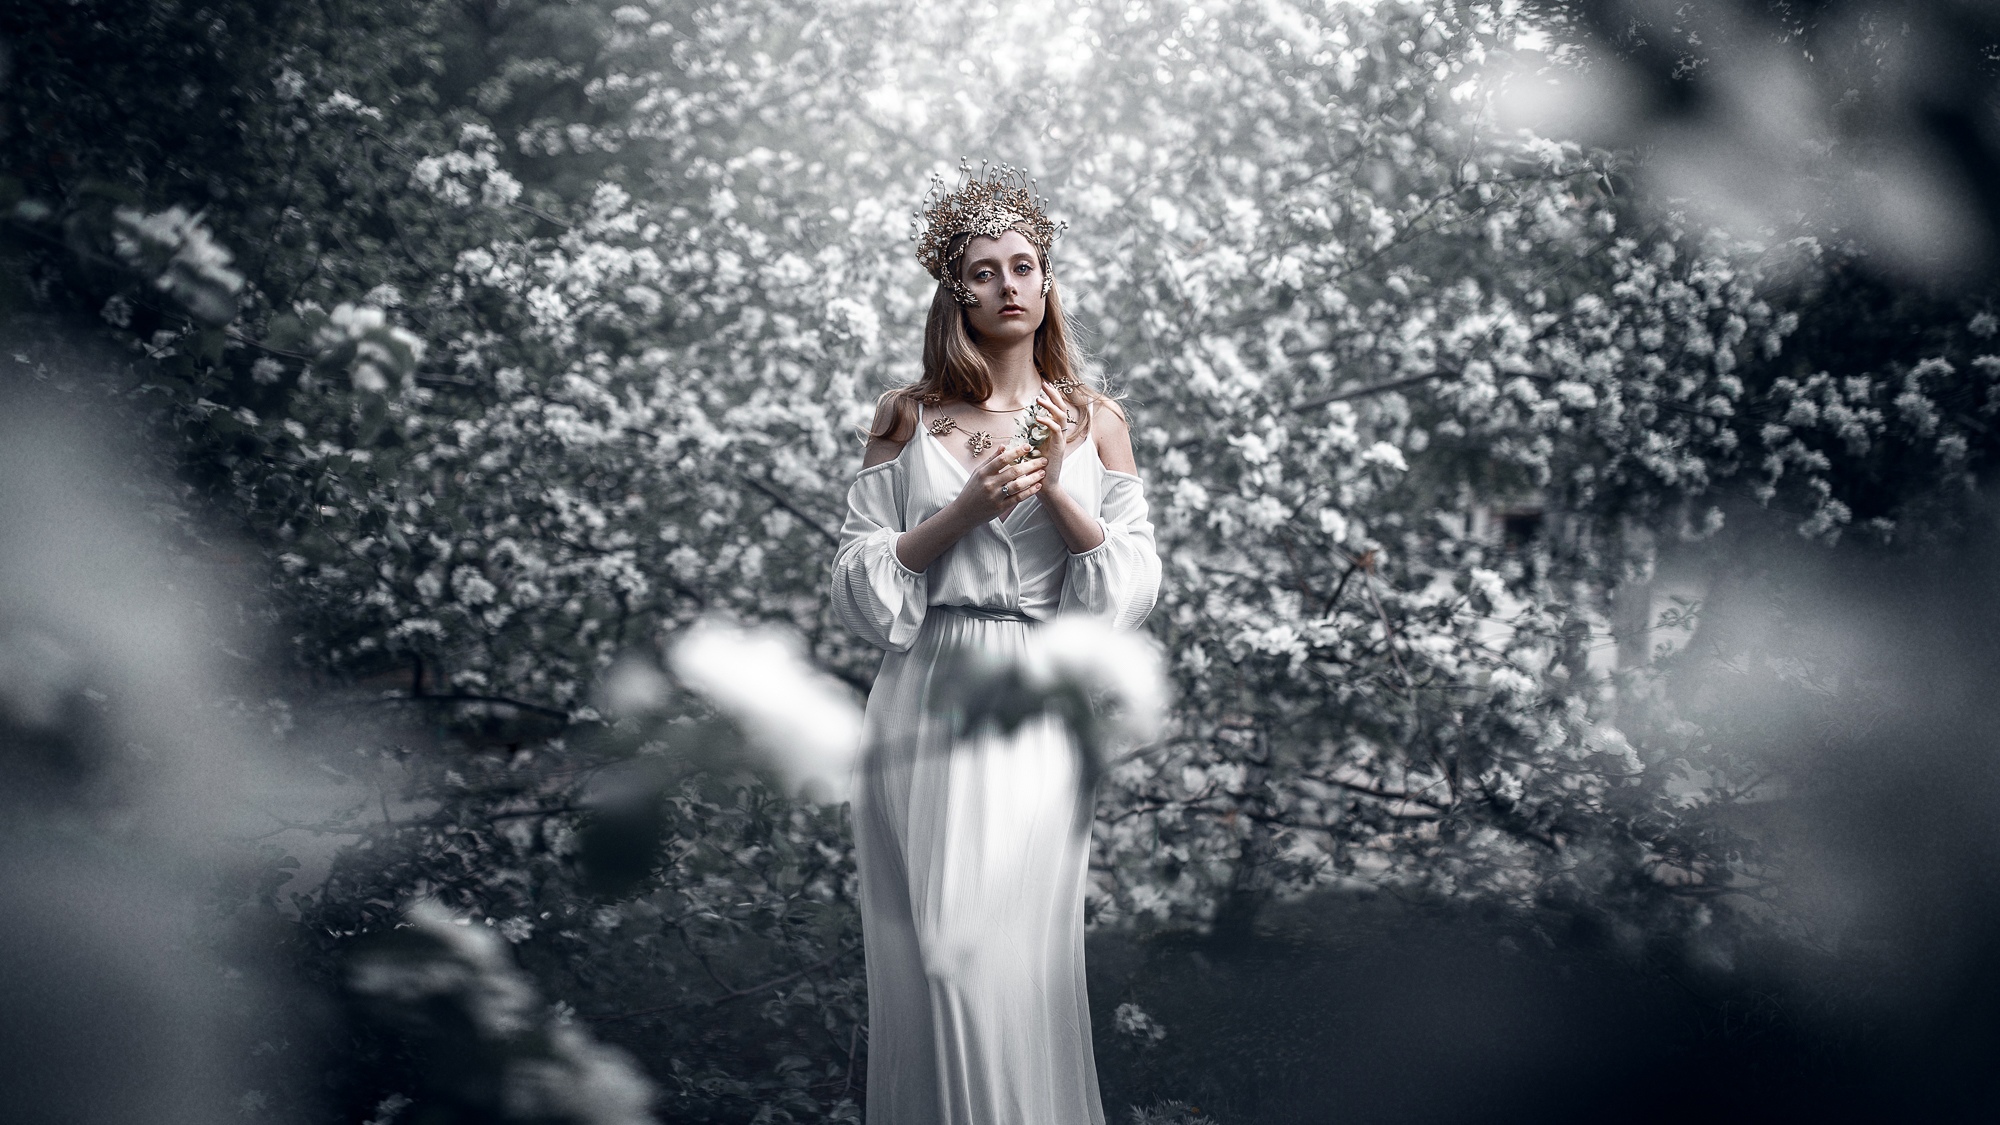 Sonja Lebedewa Women Model Plants Dress White Dress Fantasy Girl Standing Looking At Viewer 2000x1125